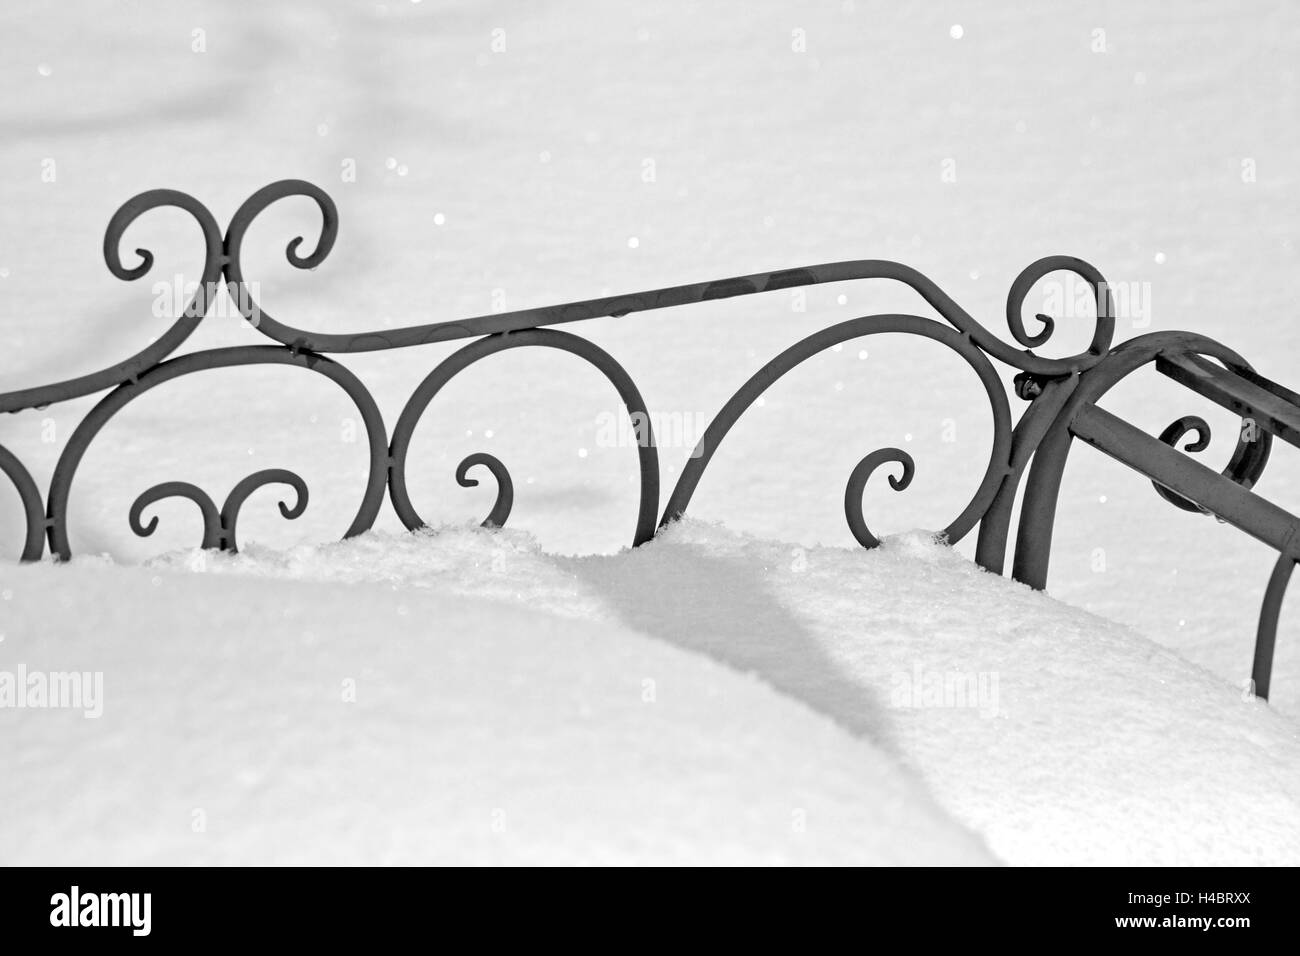 Garden bench in snow Stock Photo